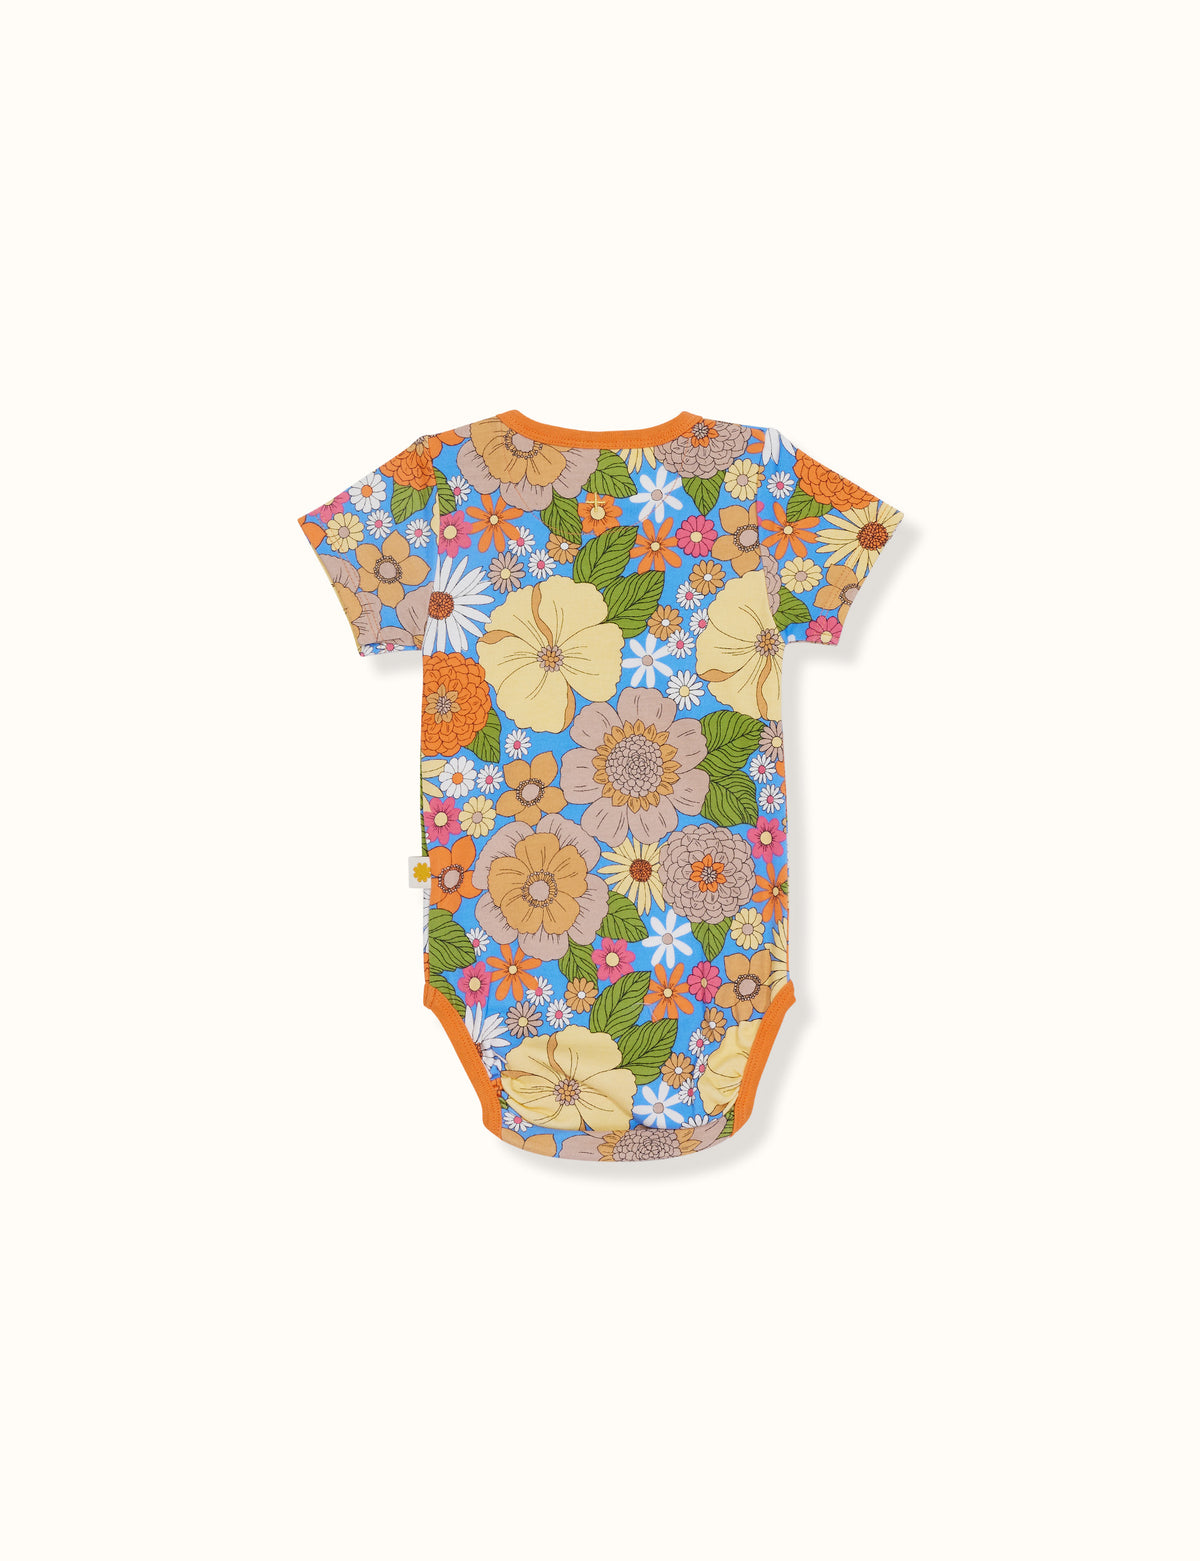 Goldie + Ace Floral Print Bodysuit Short Sleeve